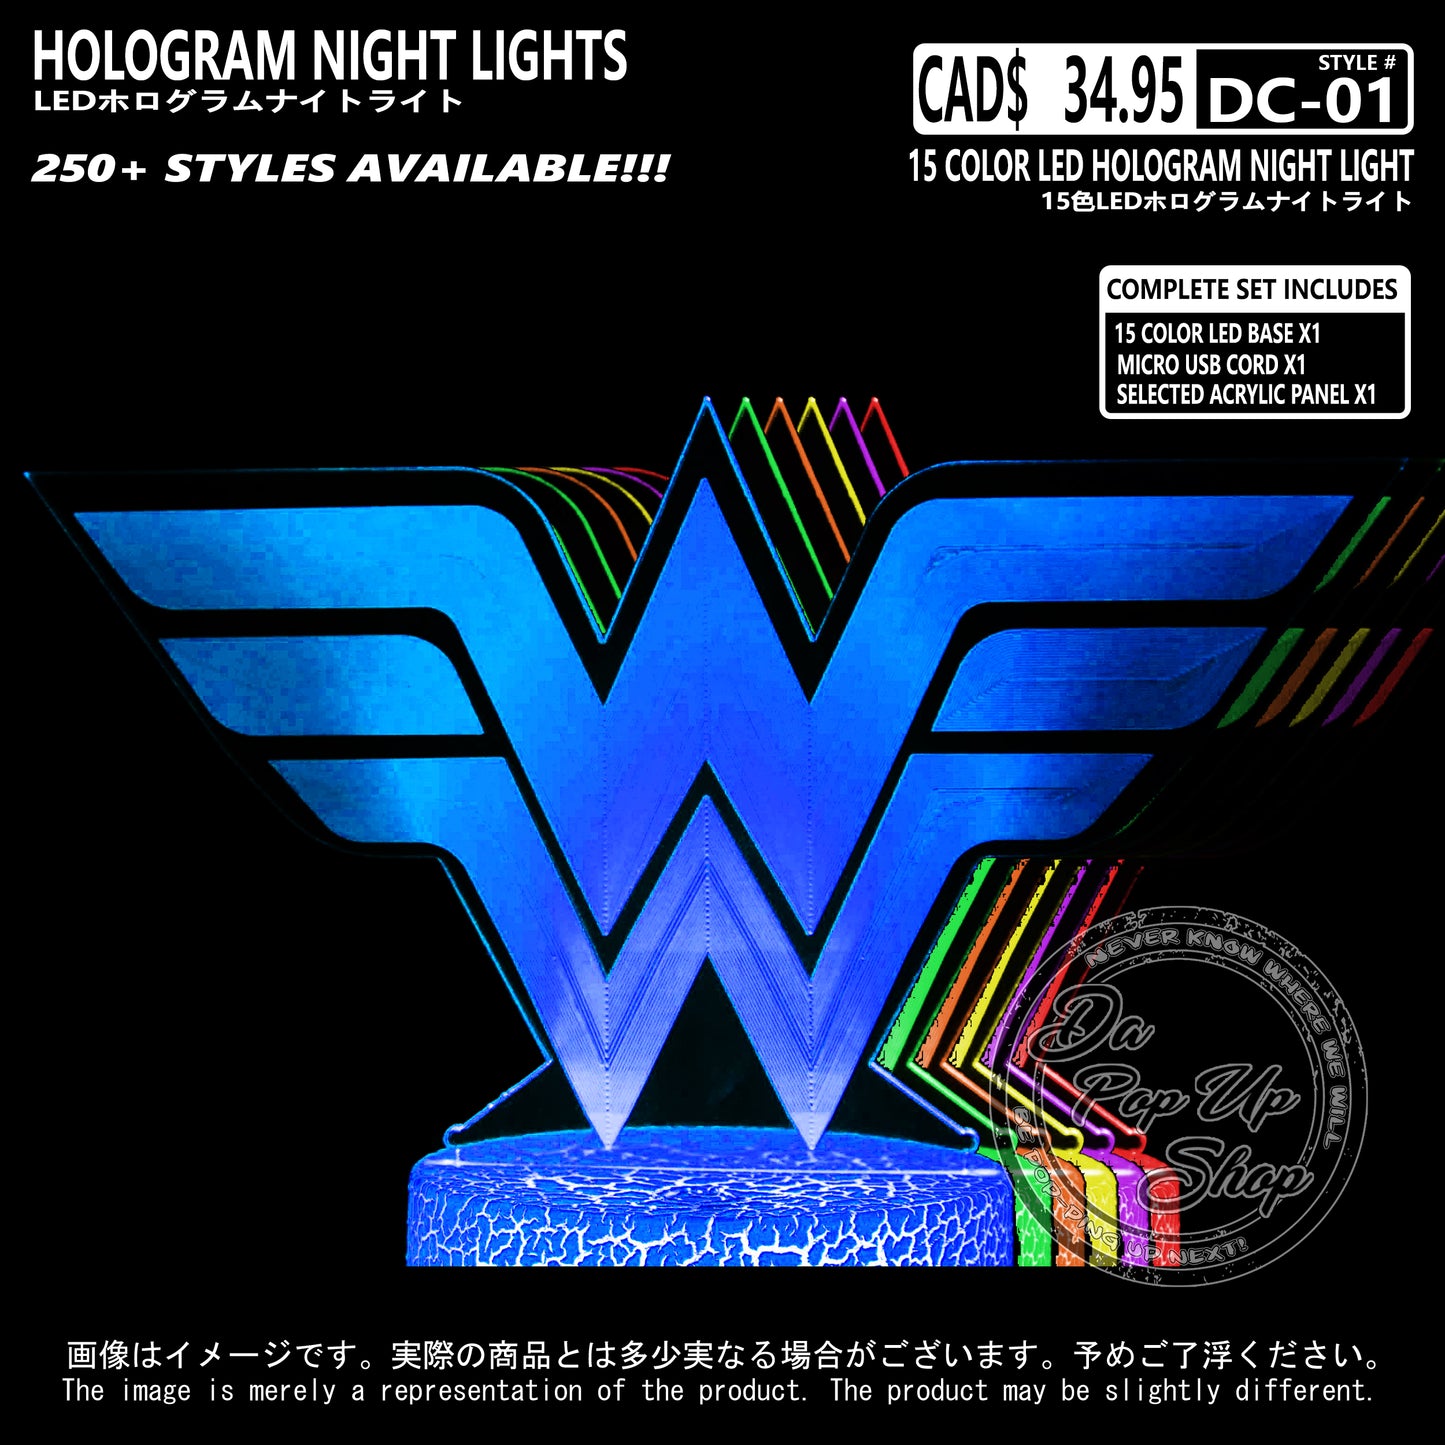 (DC-01) DC Hologram LED Night Light